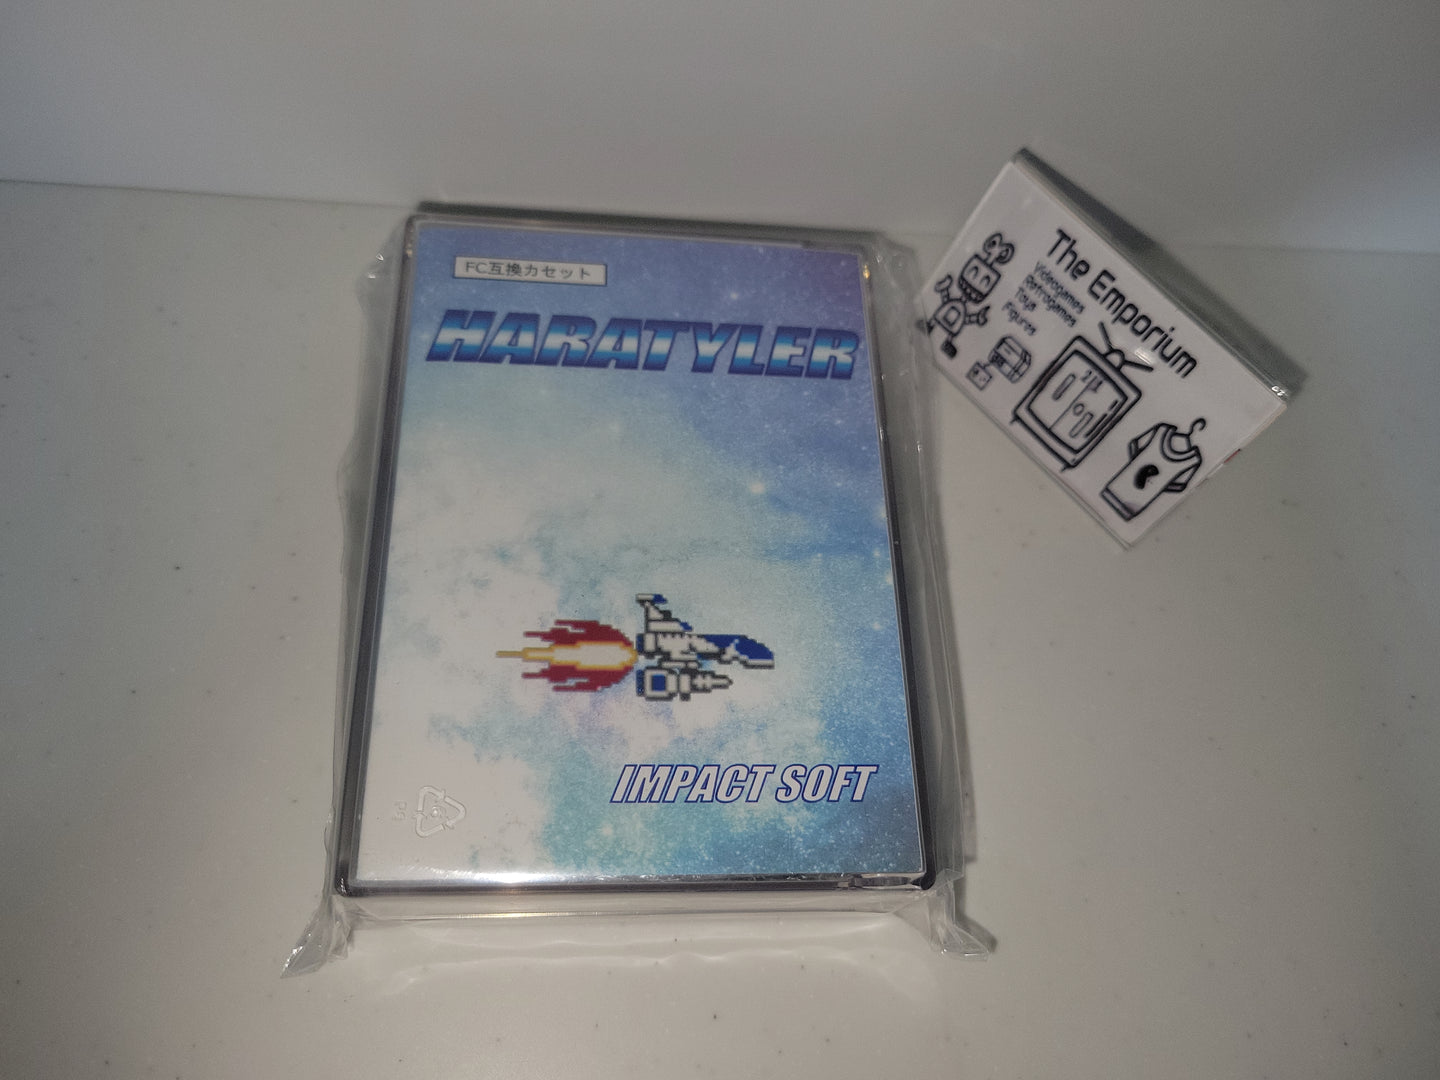 Haratyler - Nintendo Fc Famicom